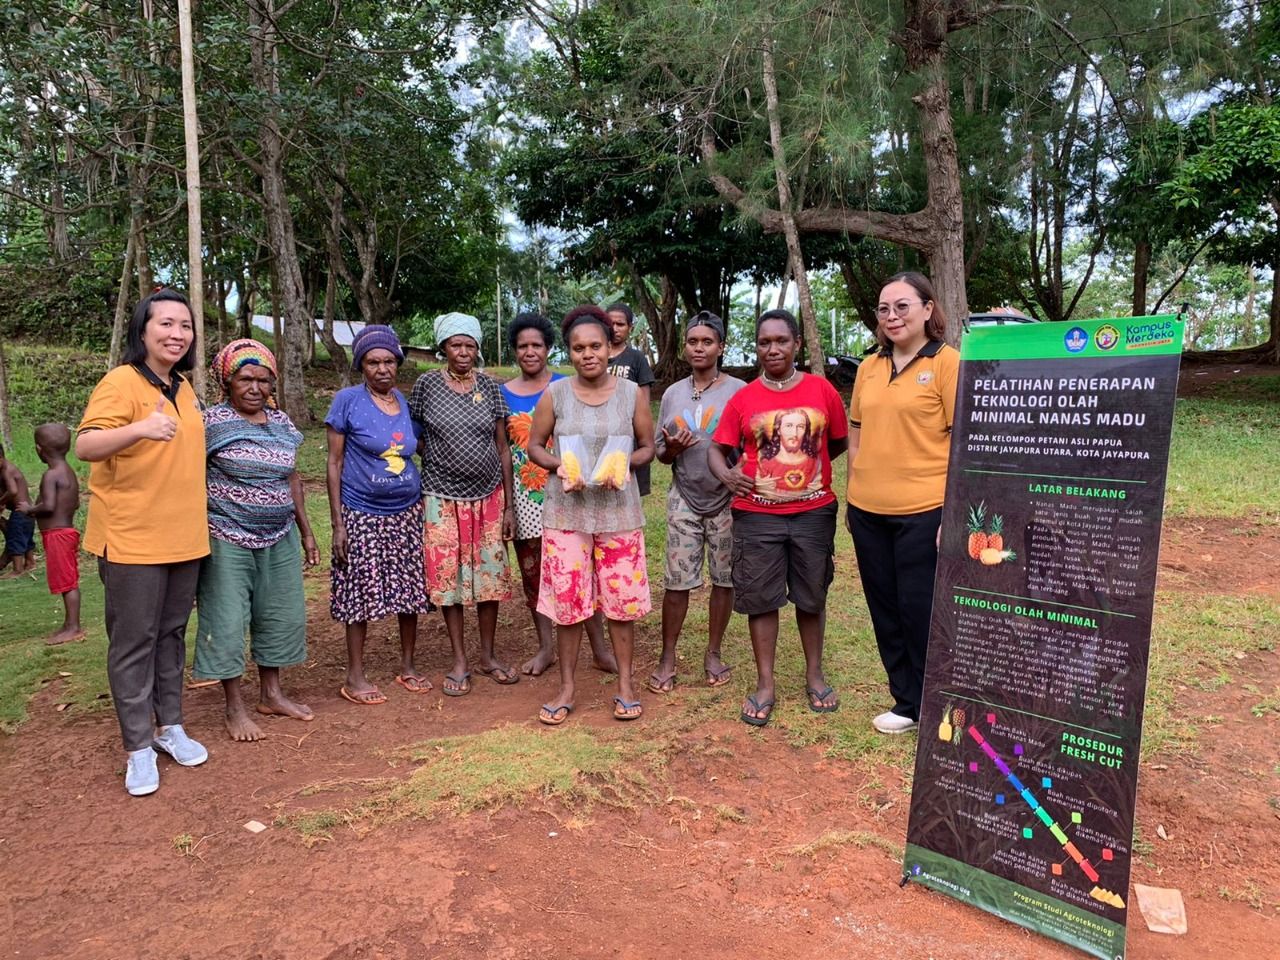 Suasana saat Ketua Pengabdian Masyarakat, Novita Condro, M.P. foto bersama tim Prodi Agroteknologi serta petani nanas madu Papua